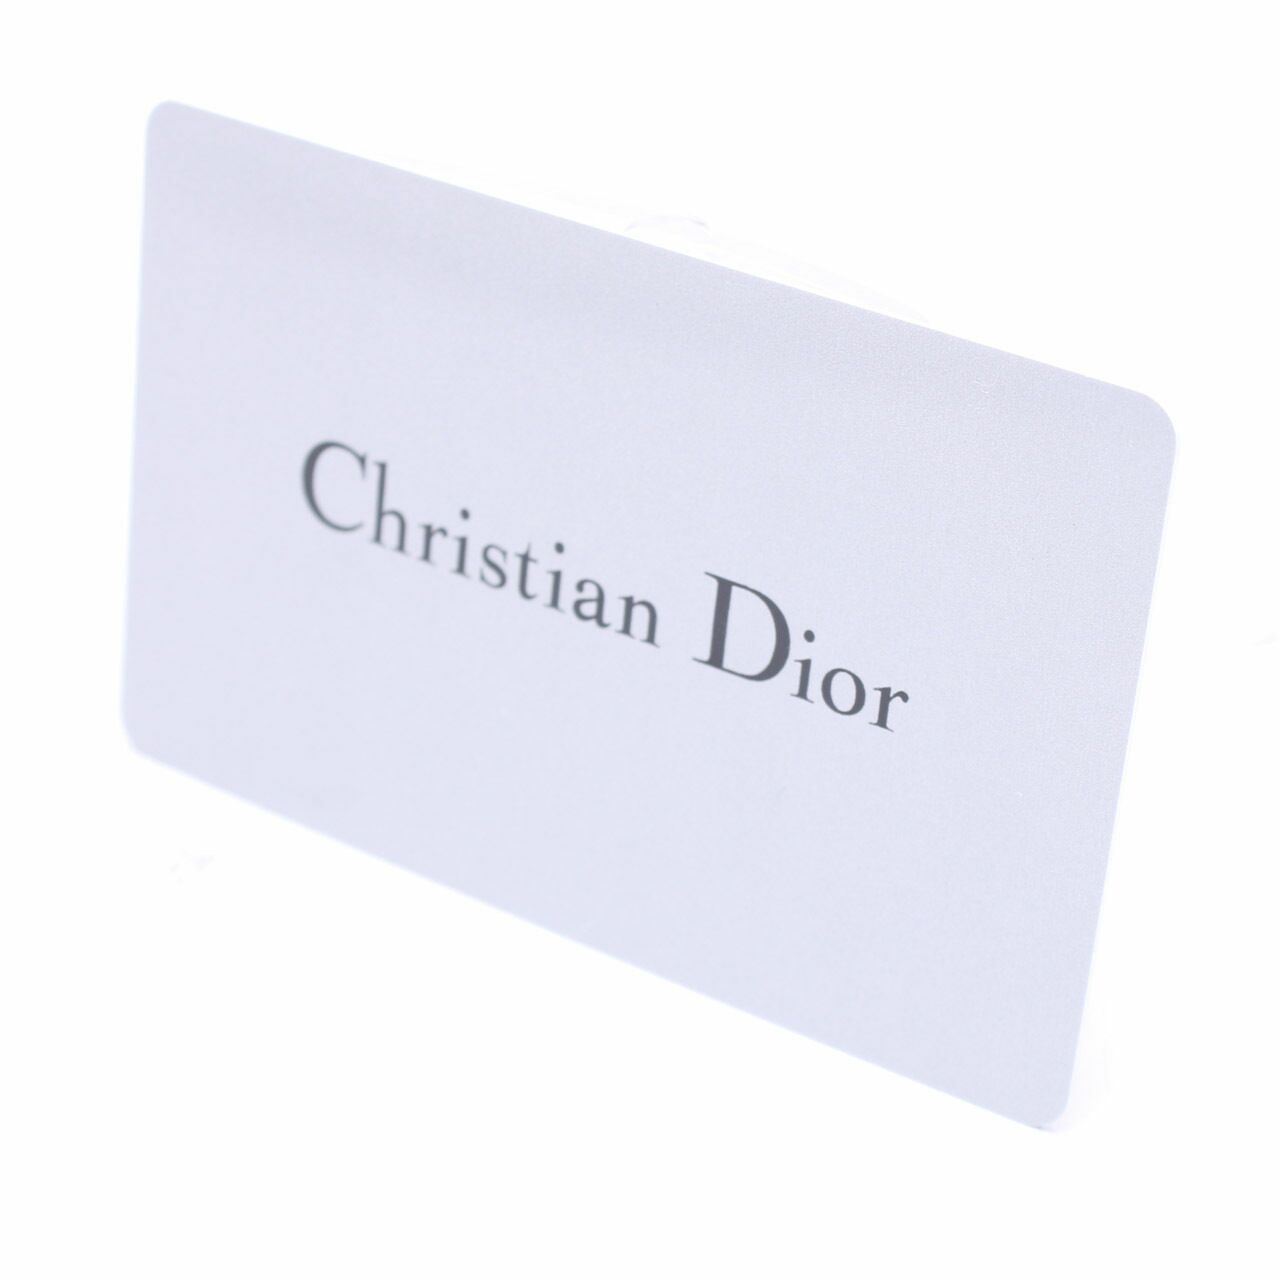 Christian Dior Smooth Calfskin Medium Diorissimo Tote Pink Handbag